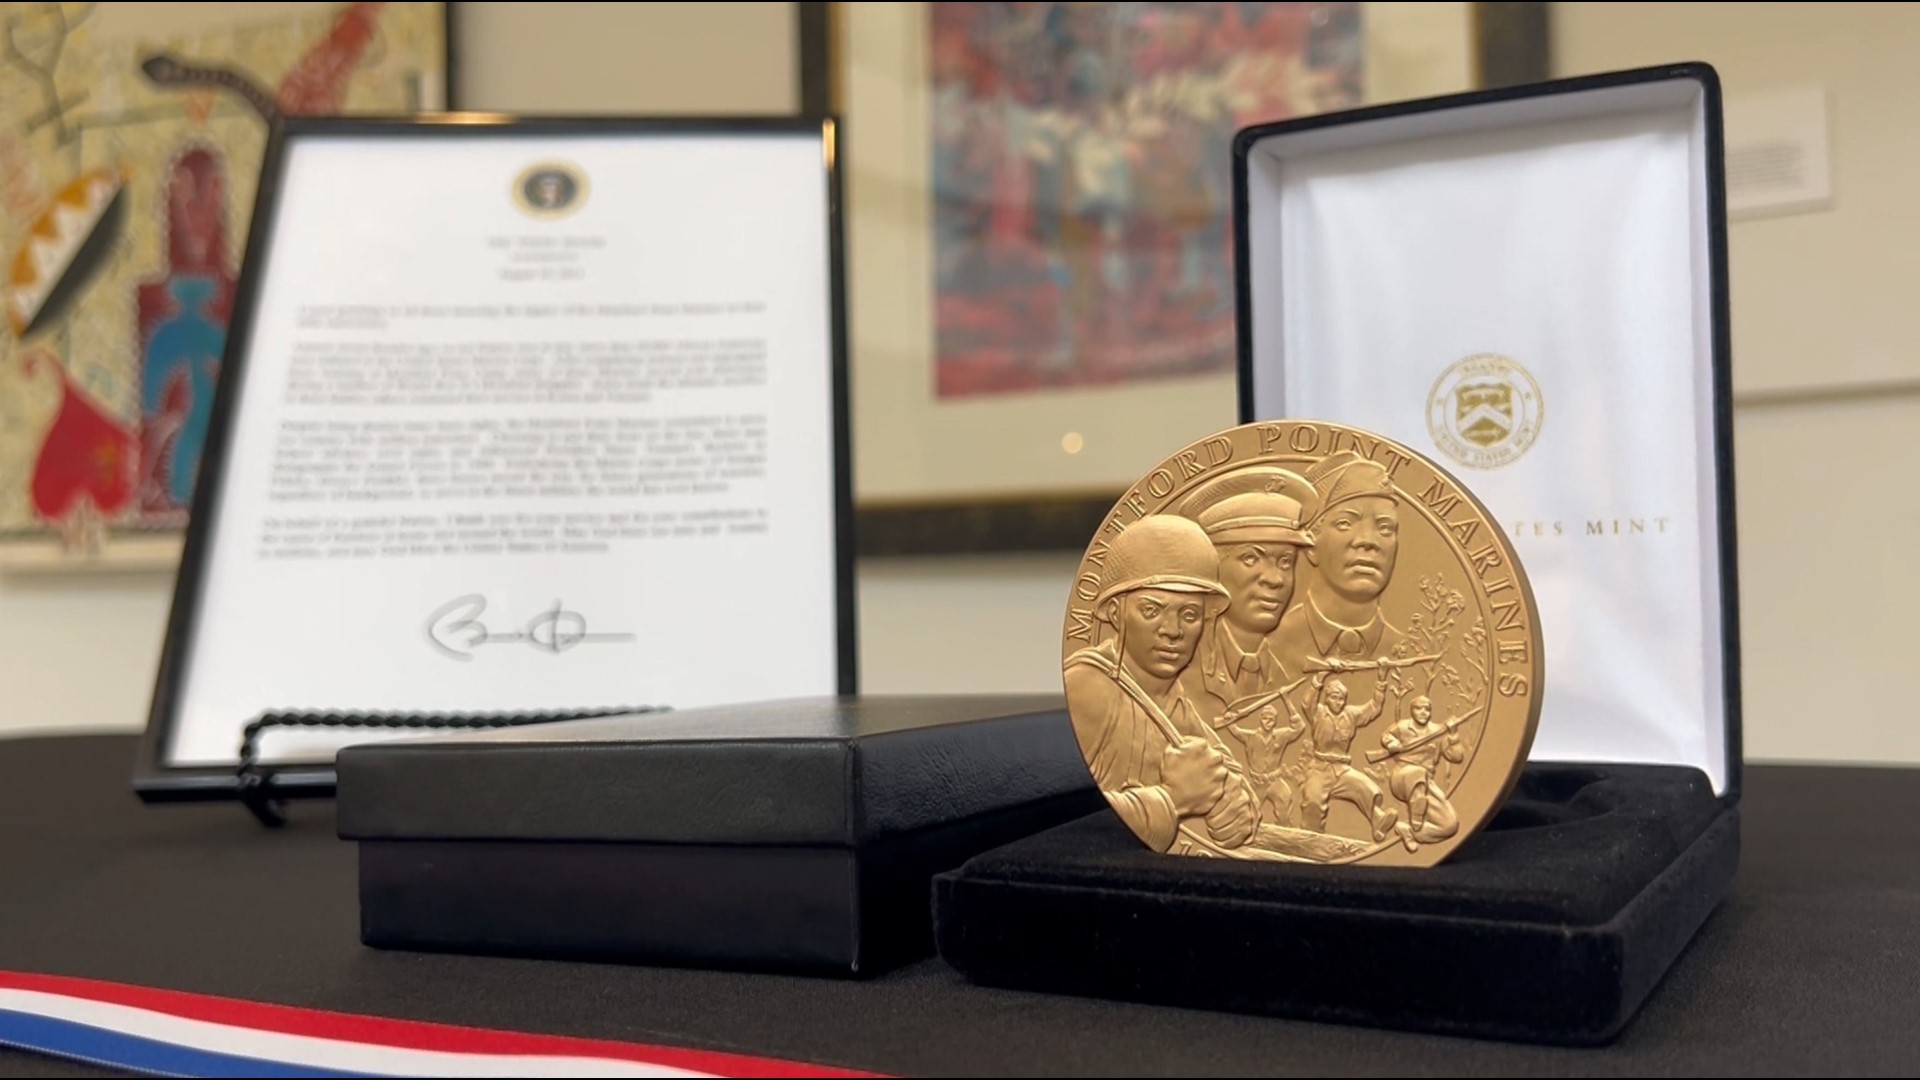 Deceased veteran K.C. Warner, who was an original Montfort Point Marine from Cochran, was awarded the medal honoring their legacy.